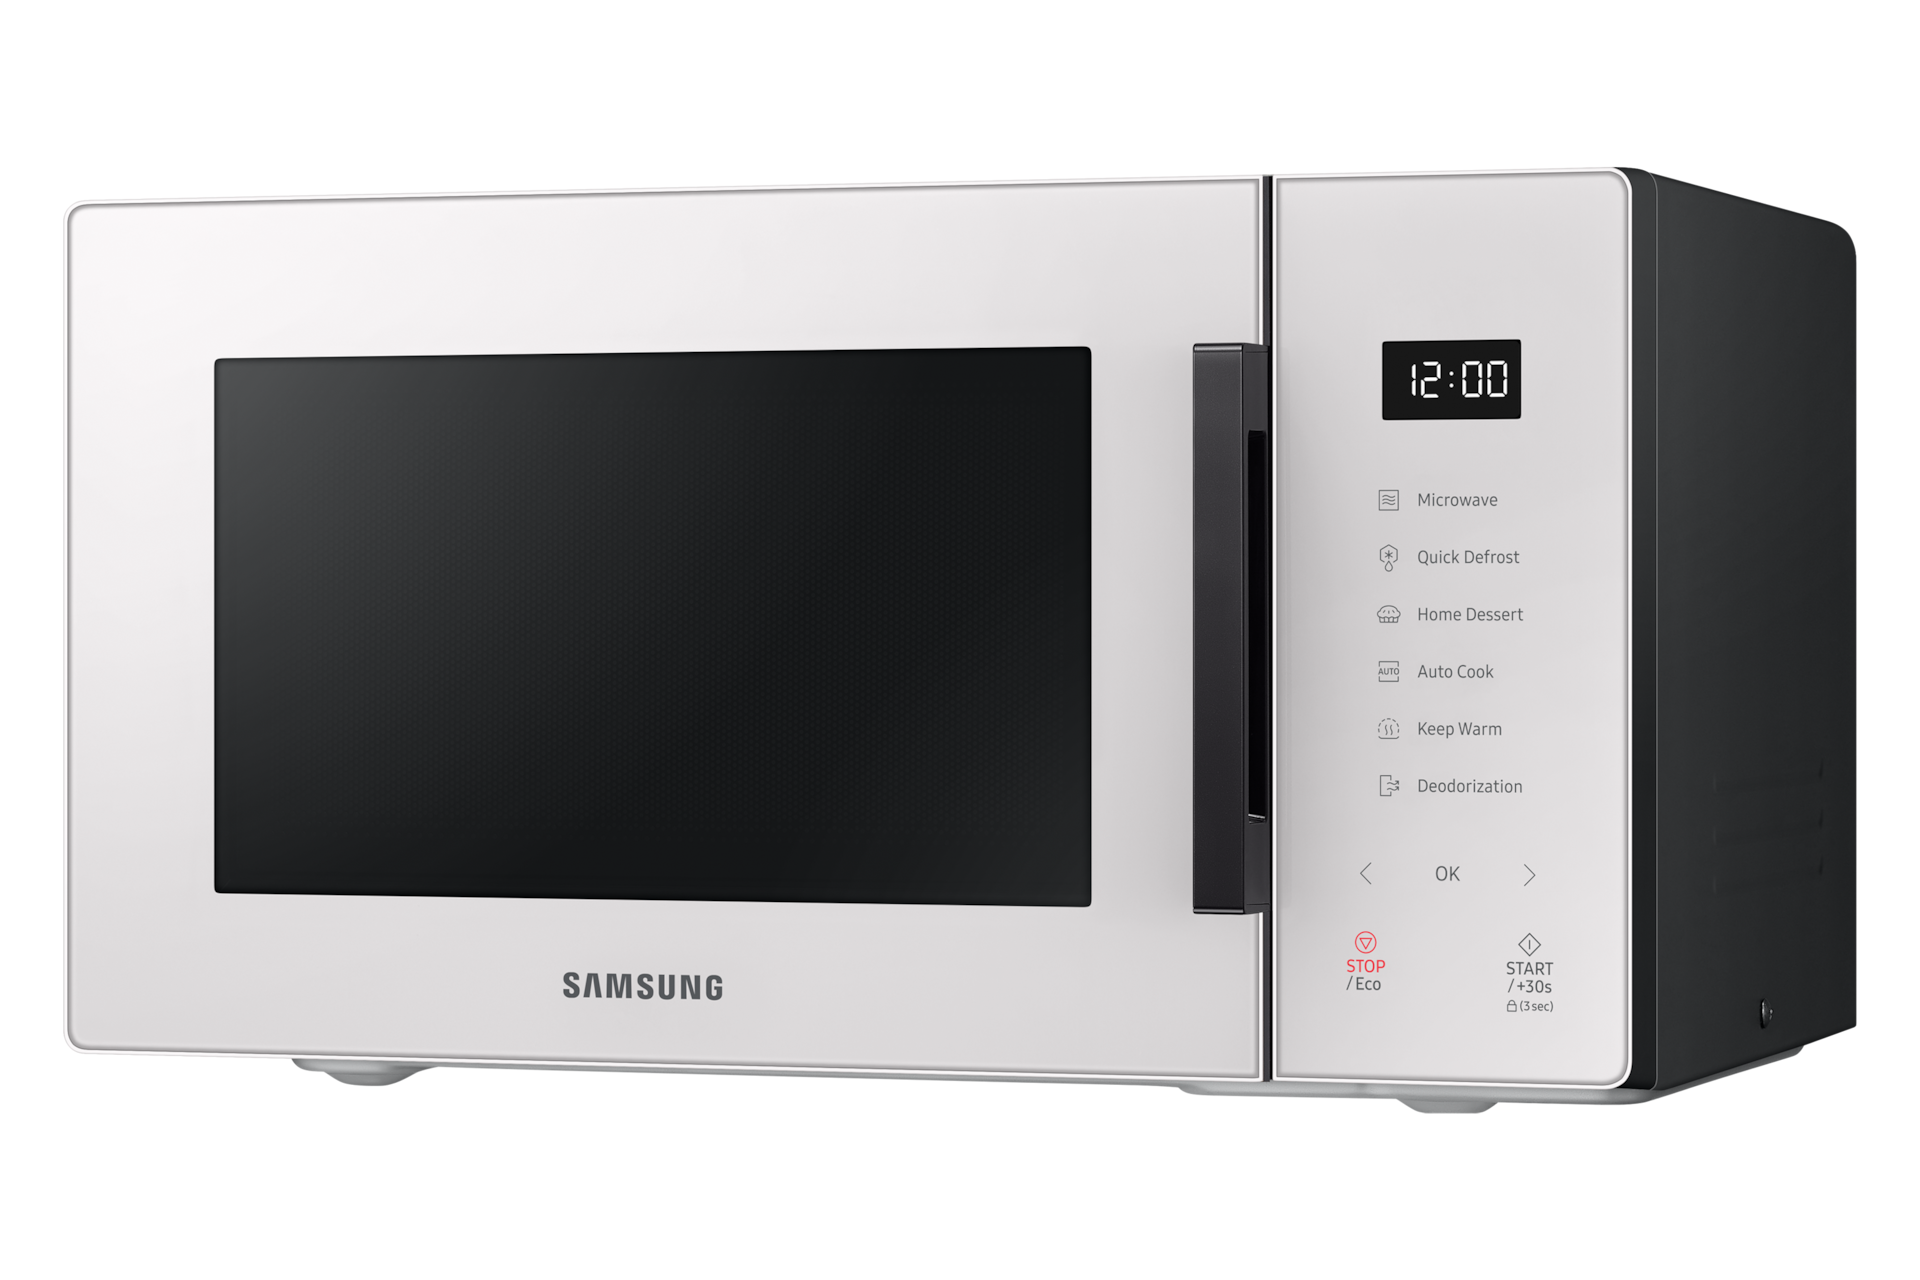 Samsung Glass Front 23 Litre Solo Microwave - Cotta White (MS23T5018AE/EU)